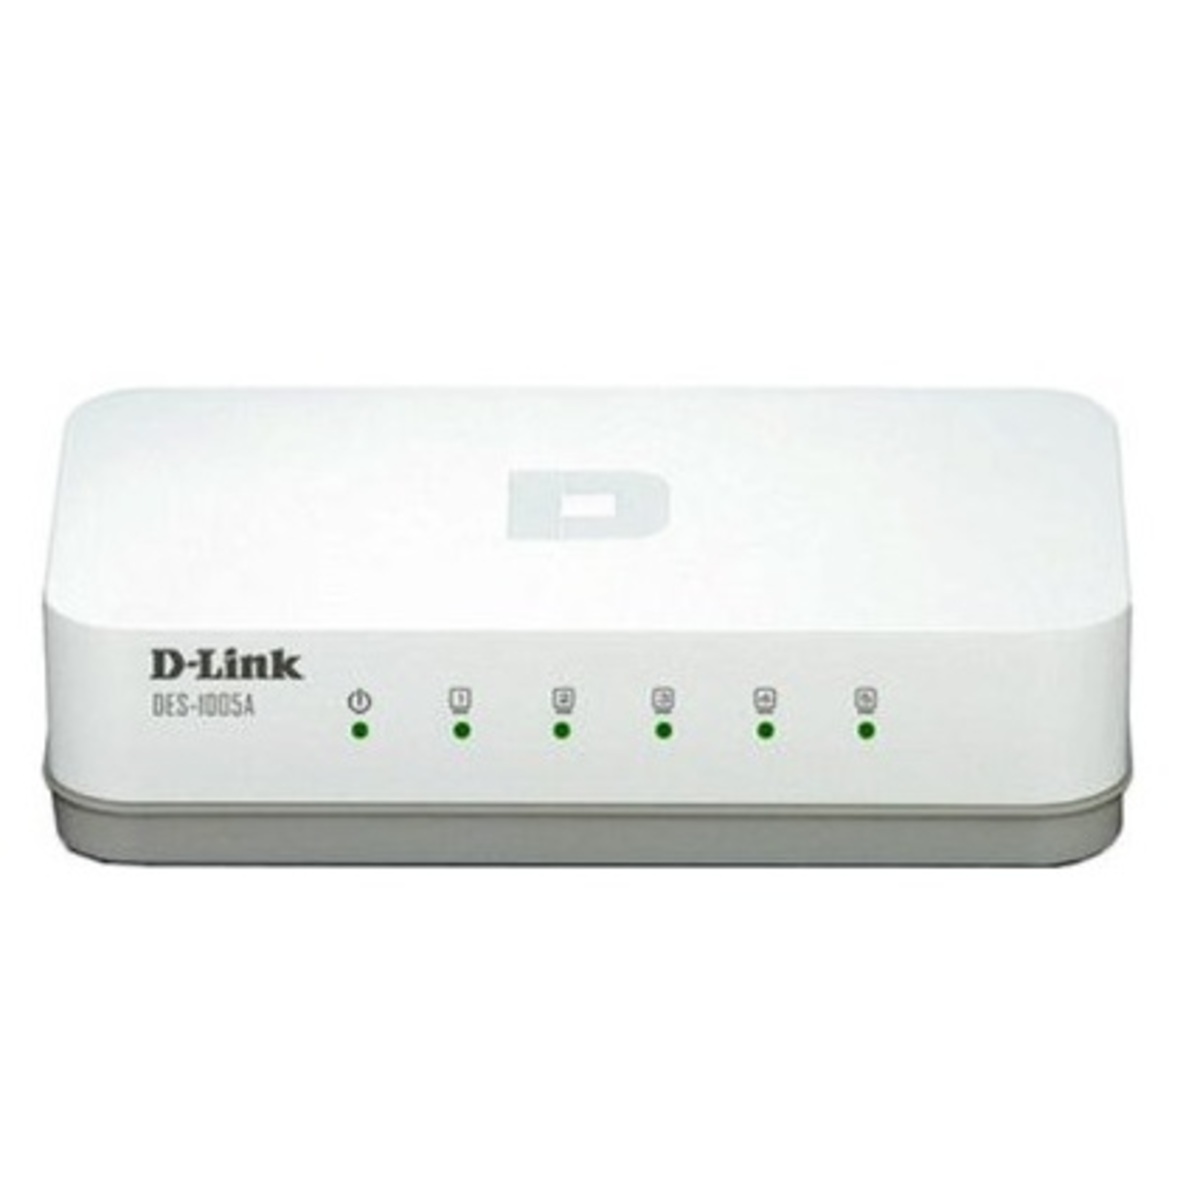 D-Link 5Port Ethernet Switch DES1005A